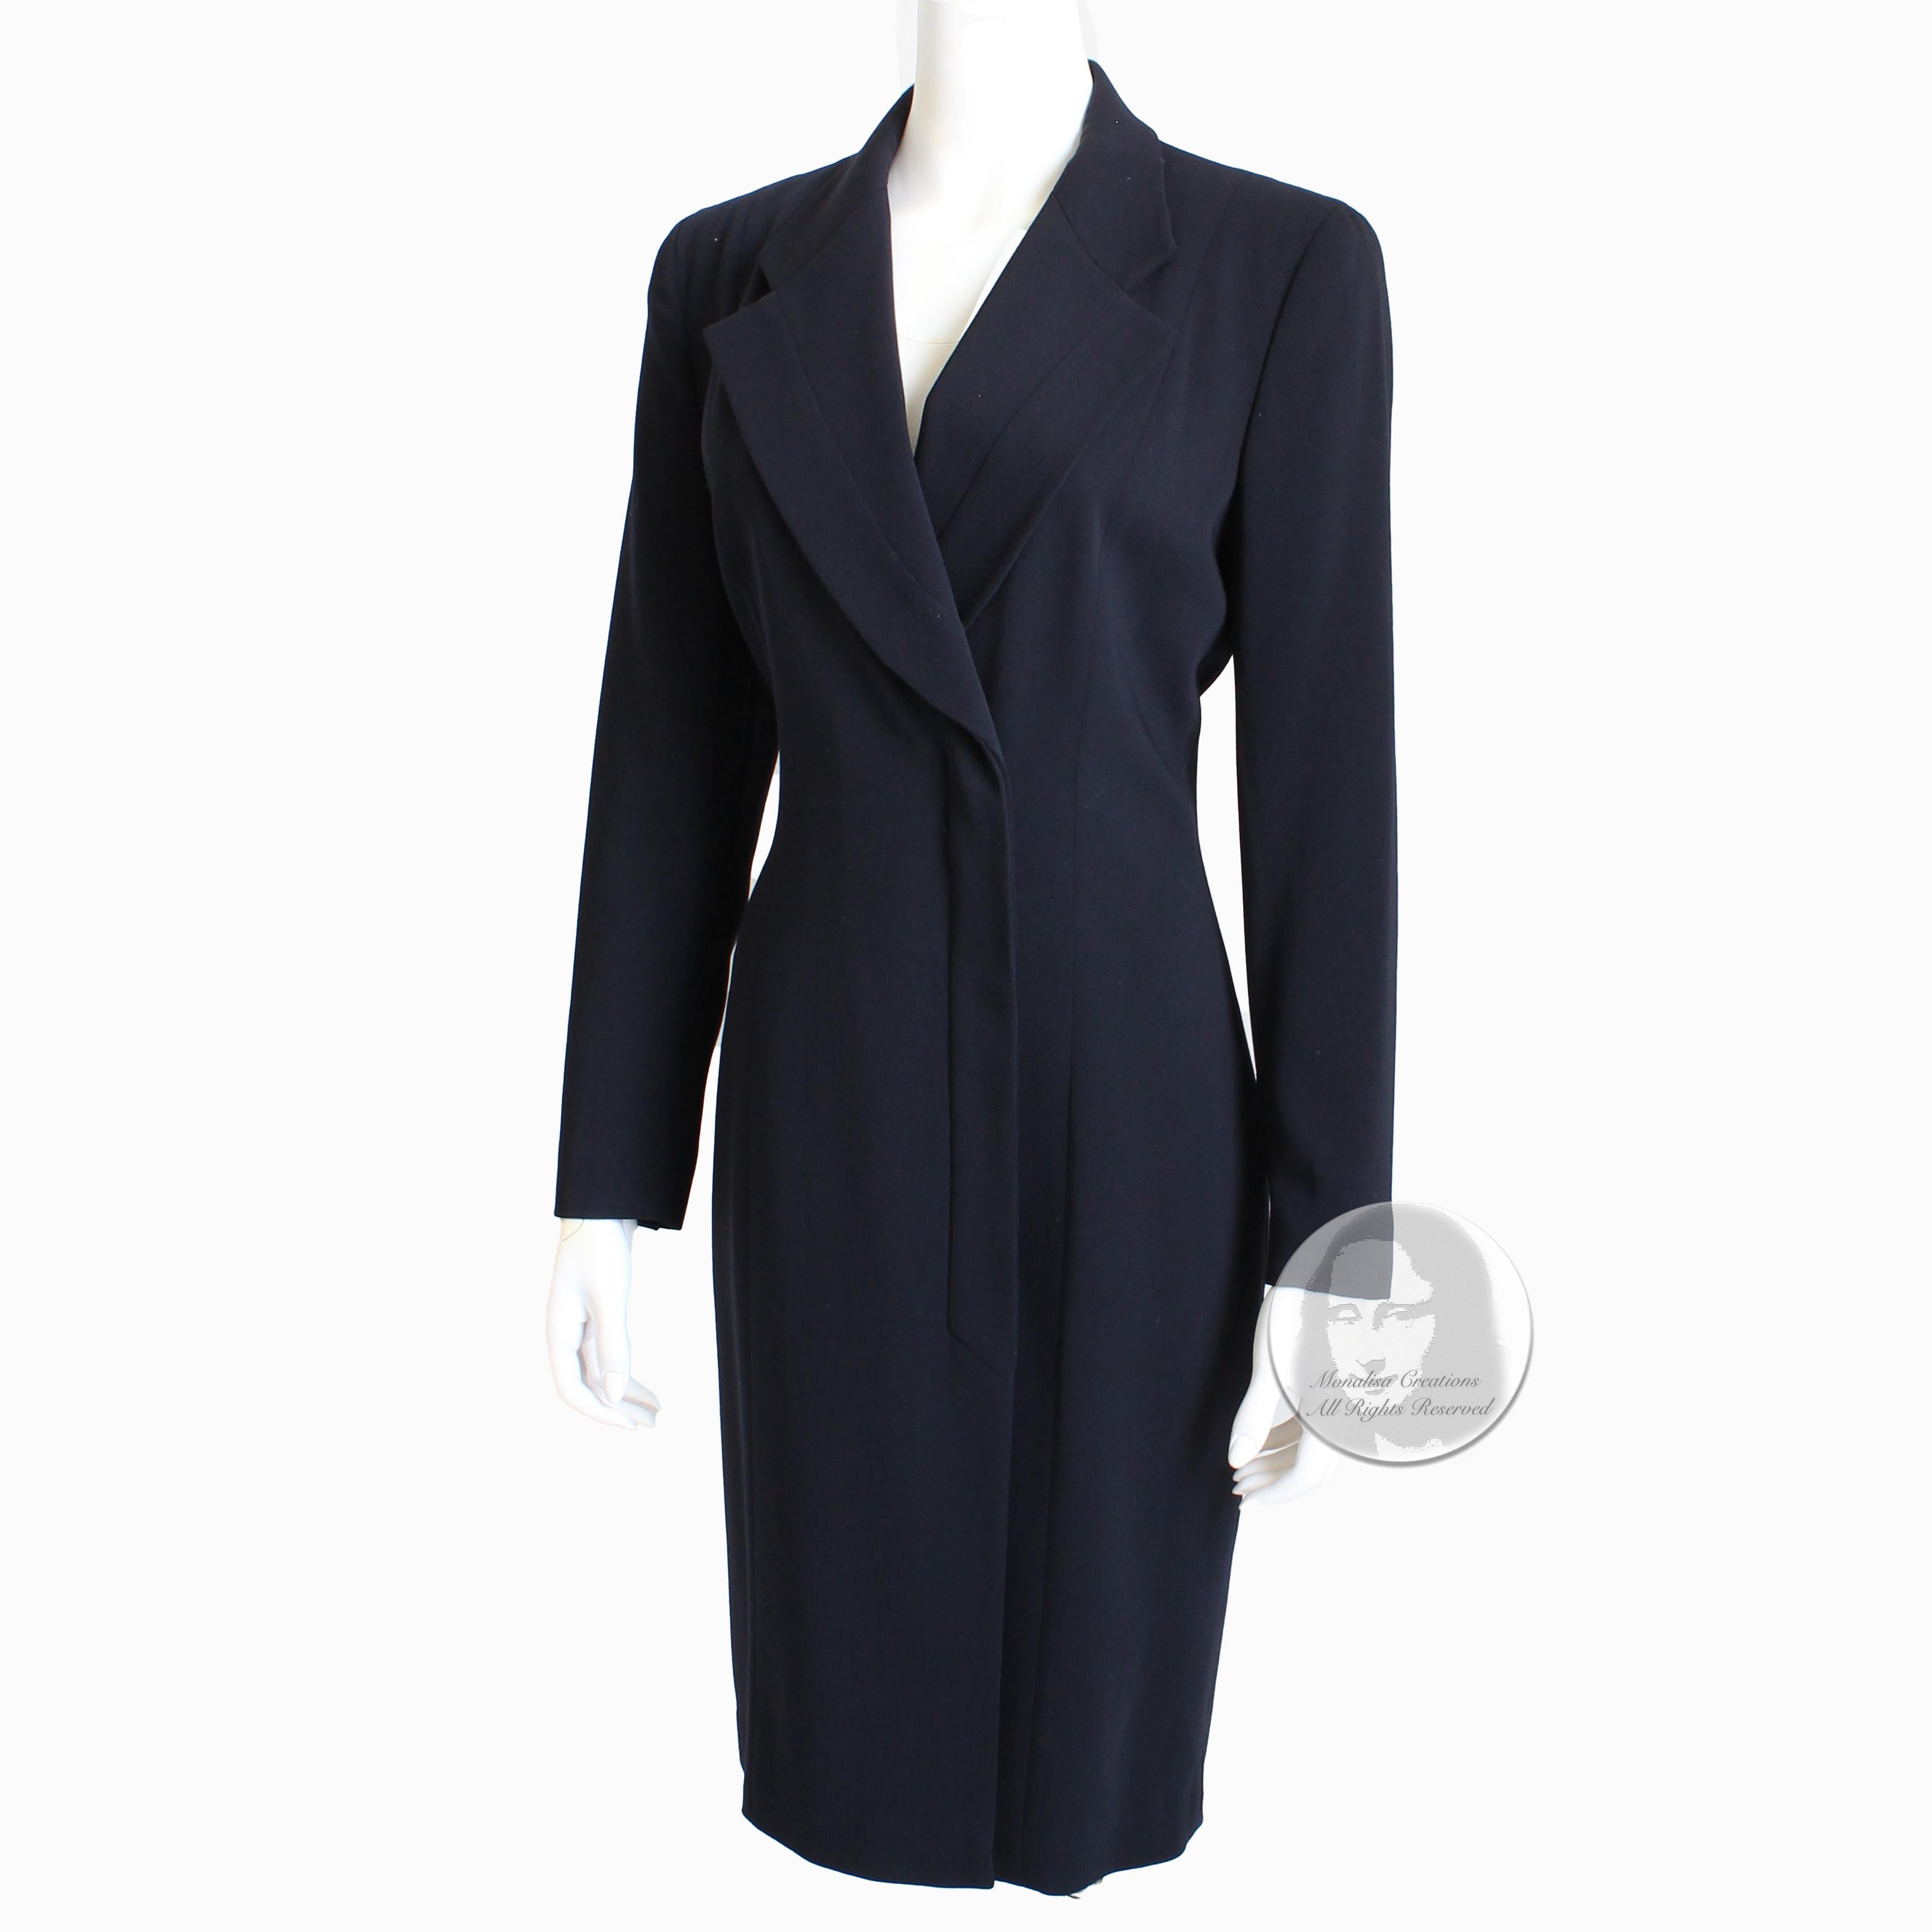 Women's Escada Coat Dress Dark Navy Wool Vintage 90s Classic Style Size 38